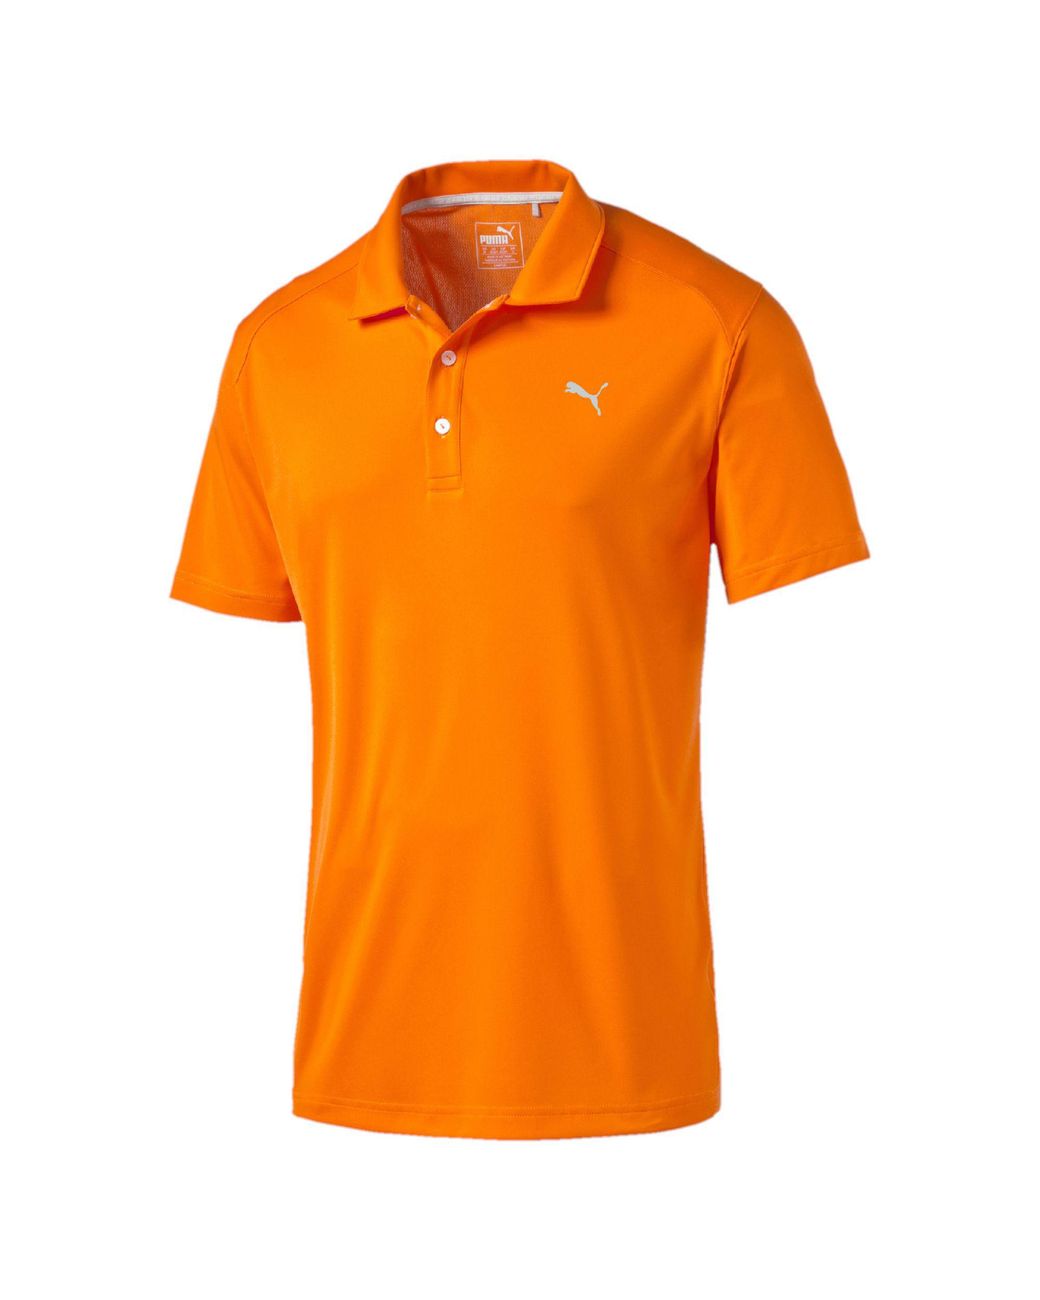 Lyst Shirt Pounce Golf Orange | PUMA Polo in Men for